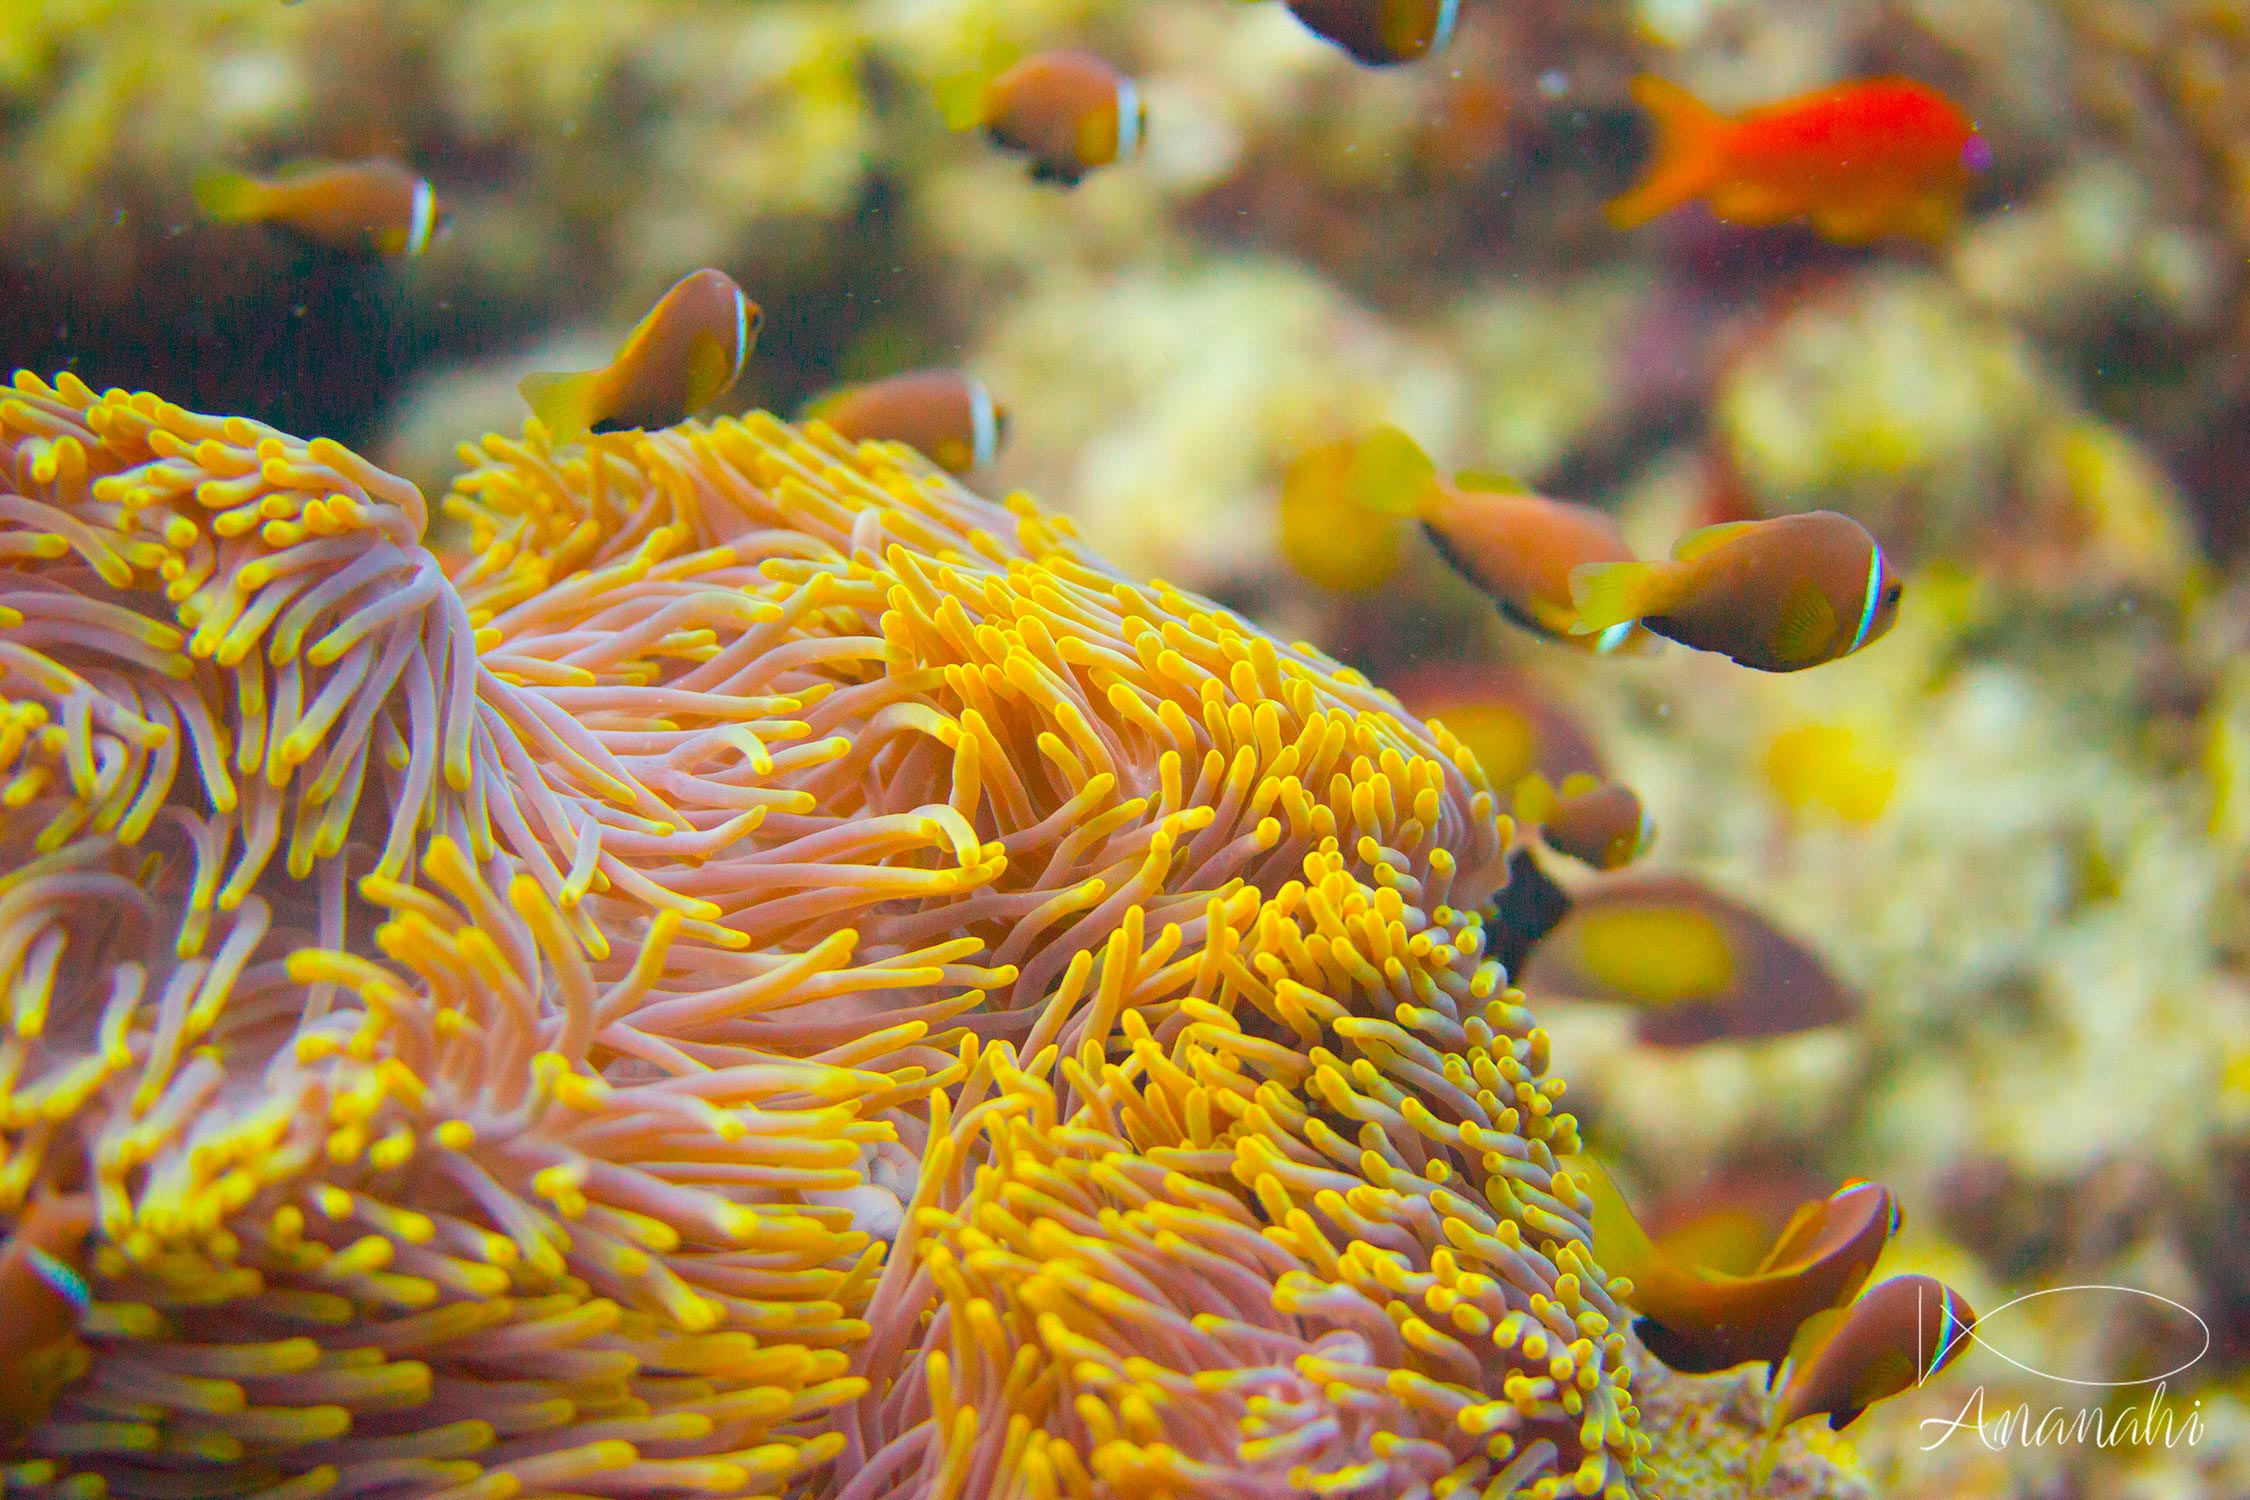 Blackfinned anemonefish of Maldives